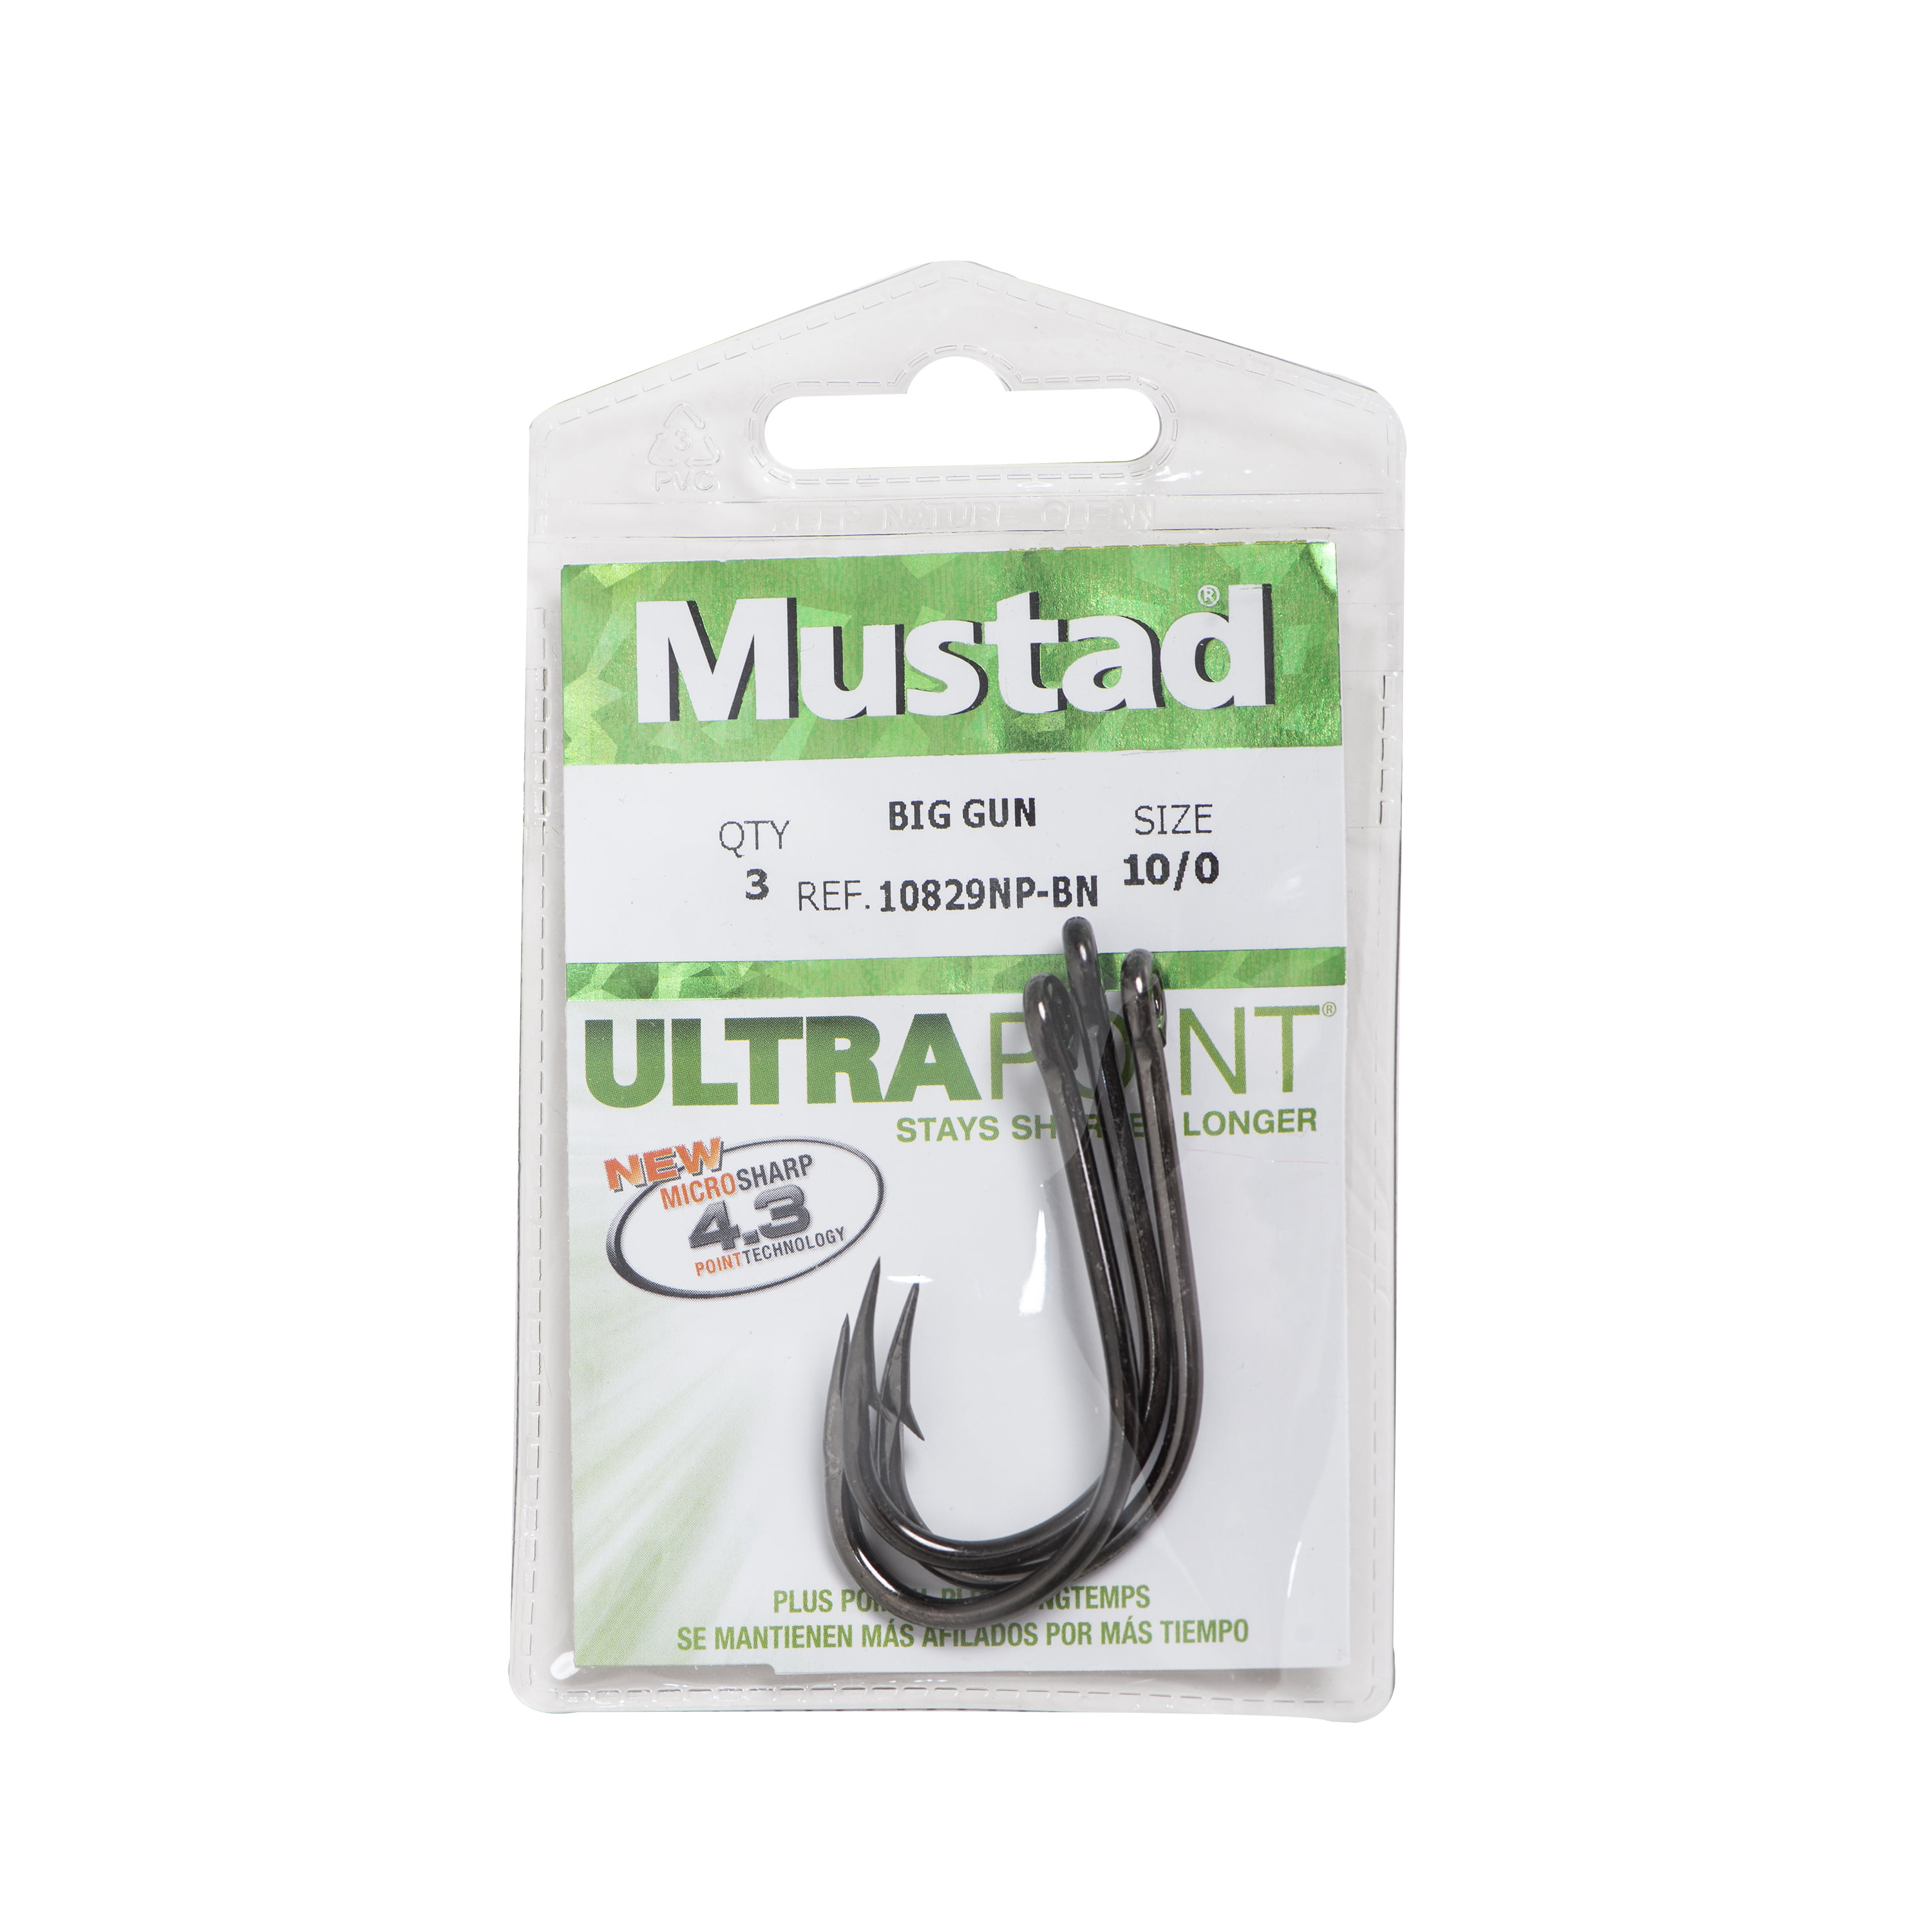 Mustad UltraPoint Big Gun Hook - 10/0 (Black Nickel) 3pc 